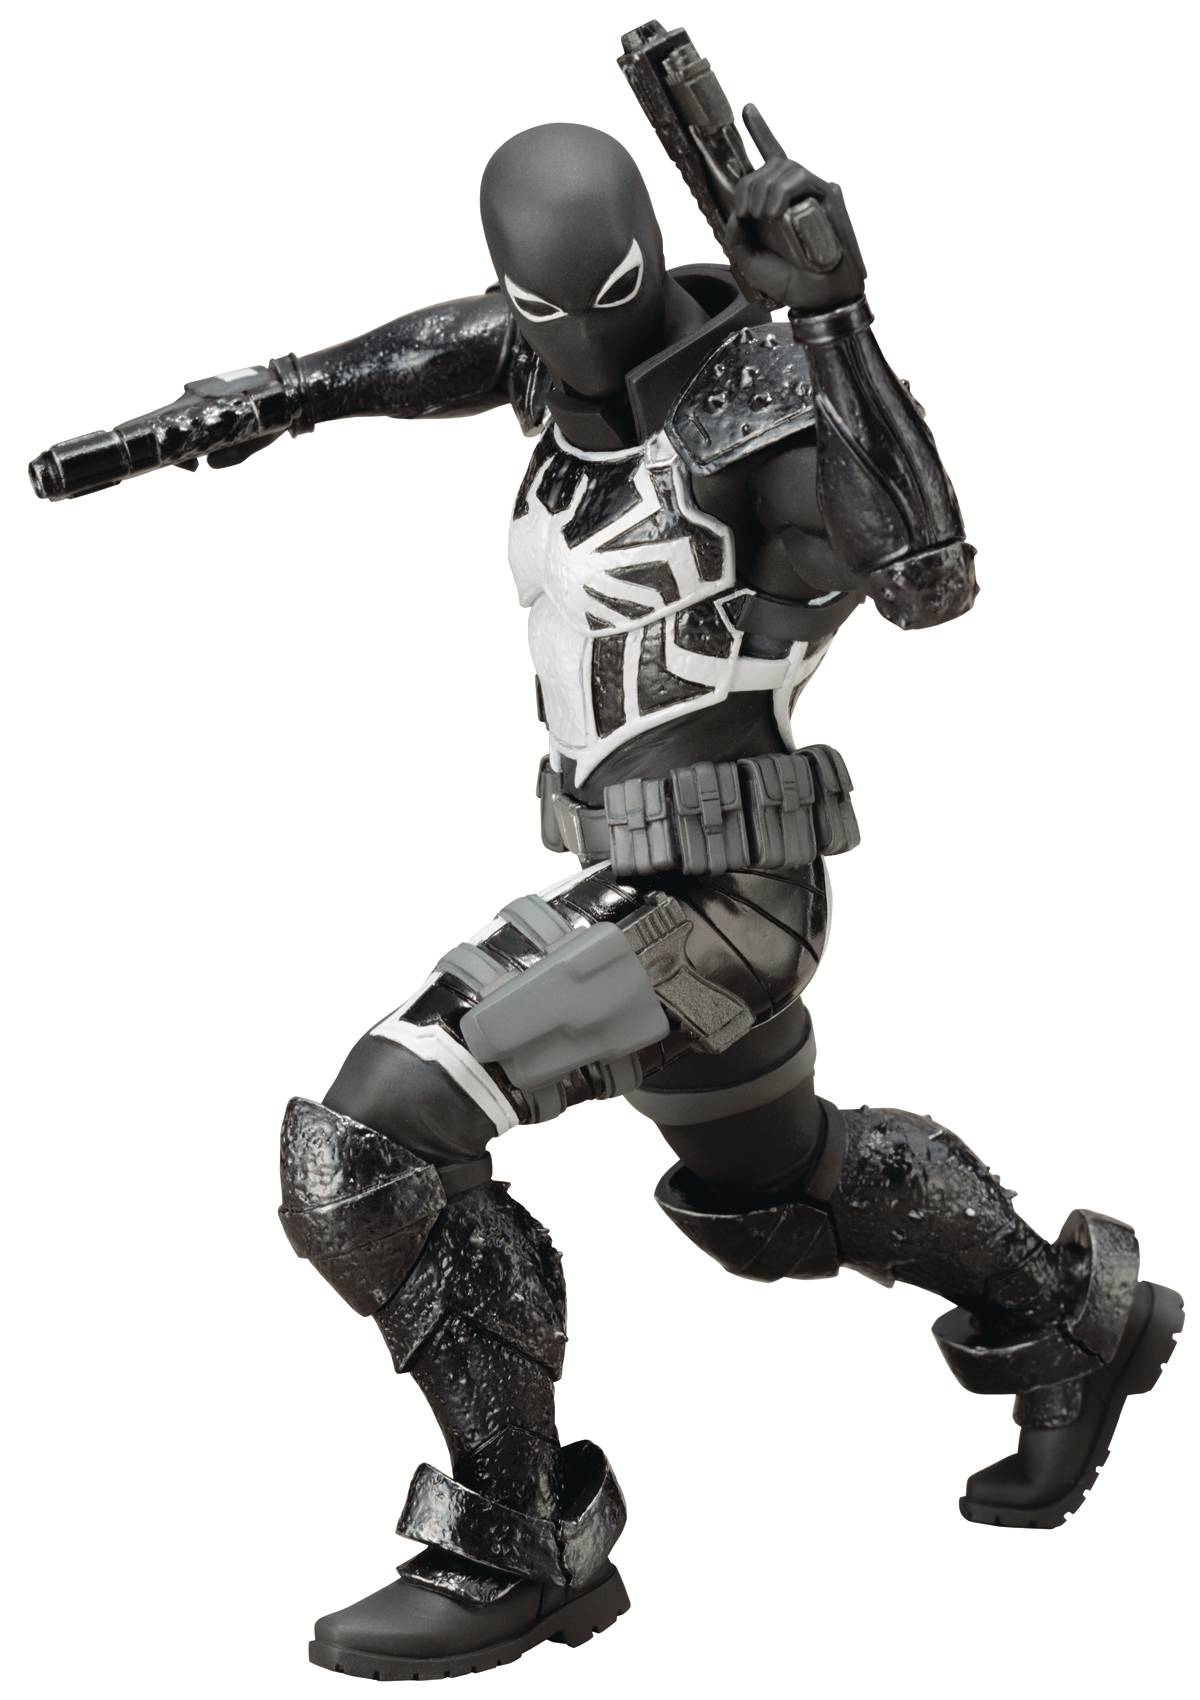 Marvel Now Agent Venom Artfx+ Statue